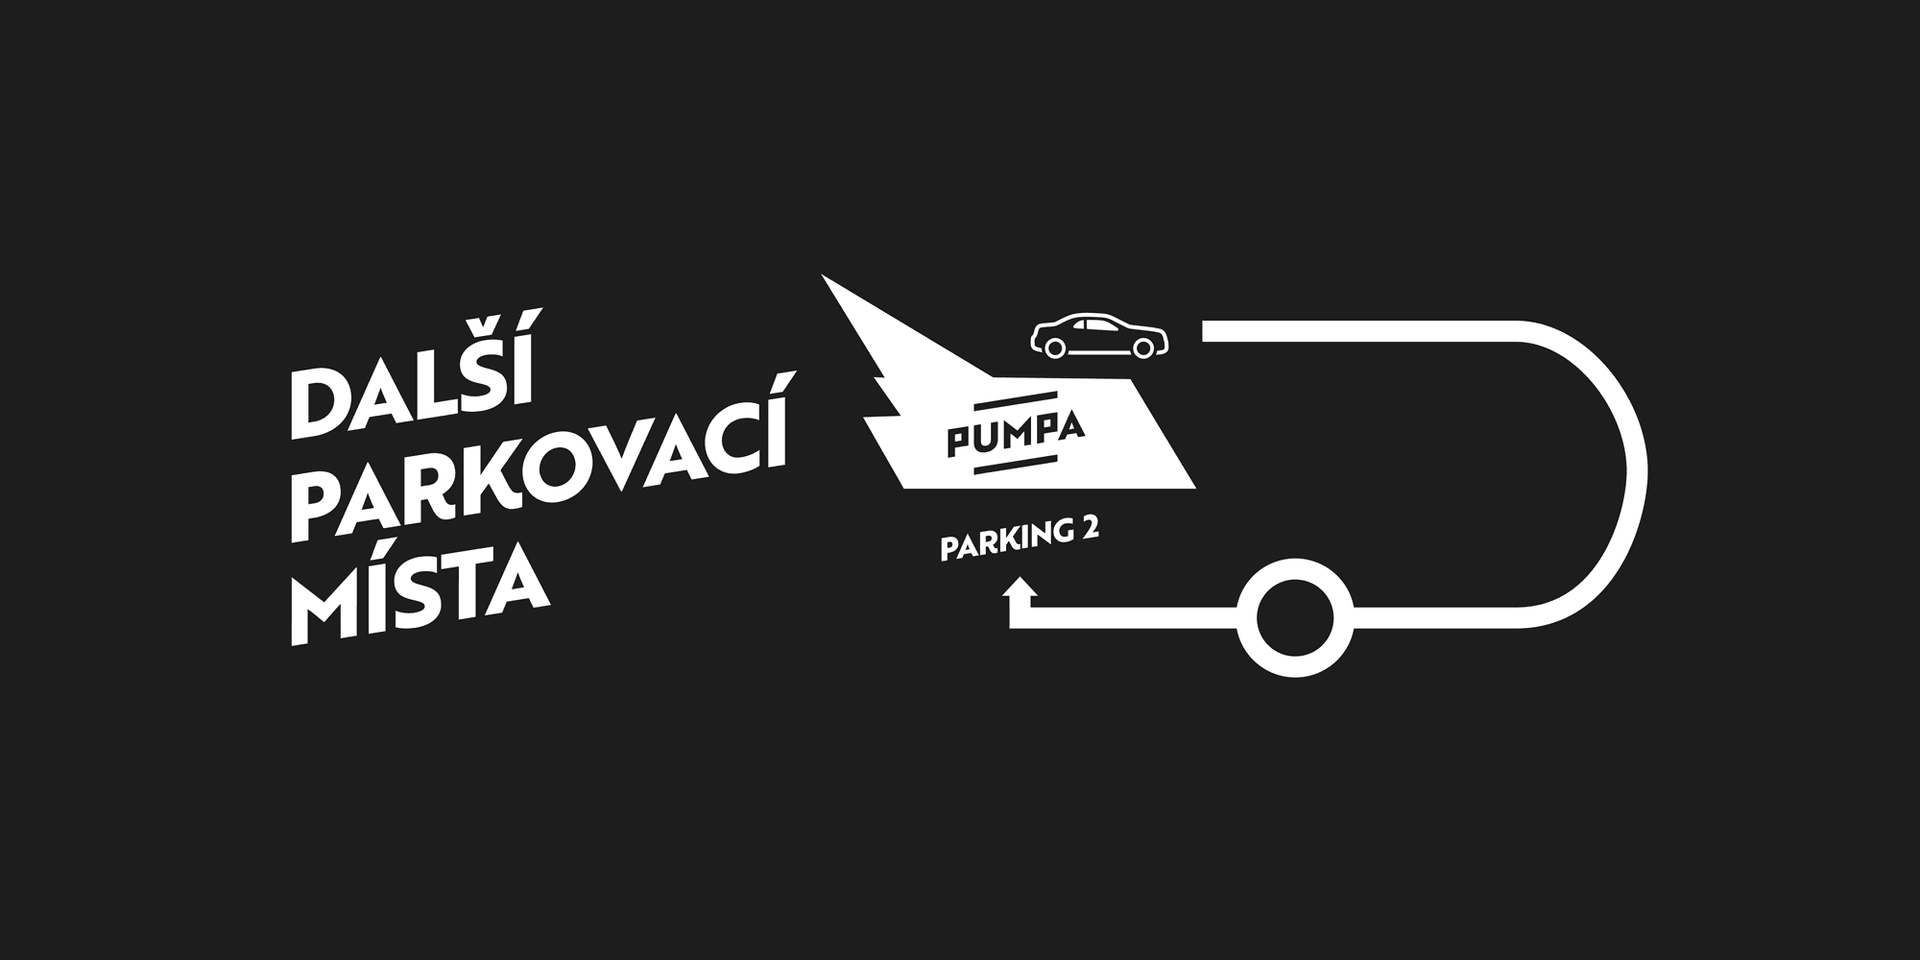 dalsi_parkovaci_PUMPA.png